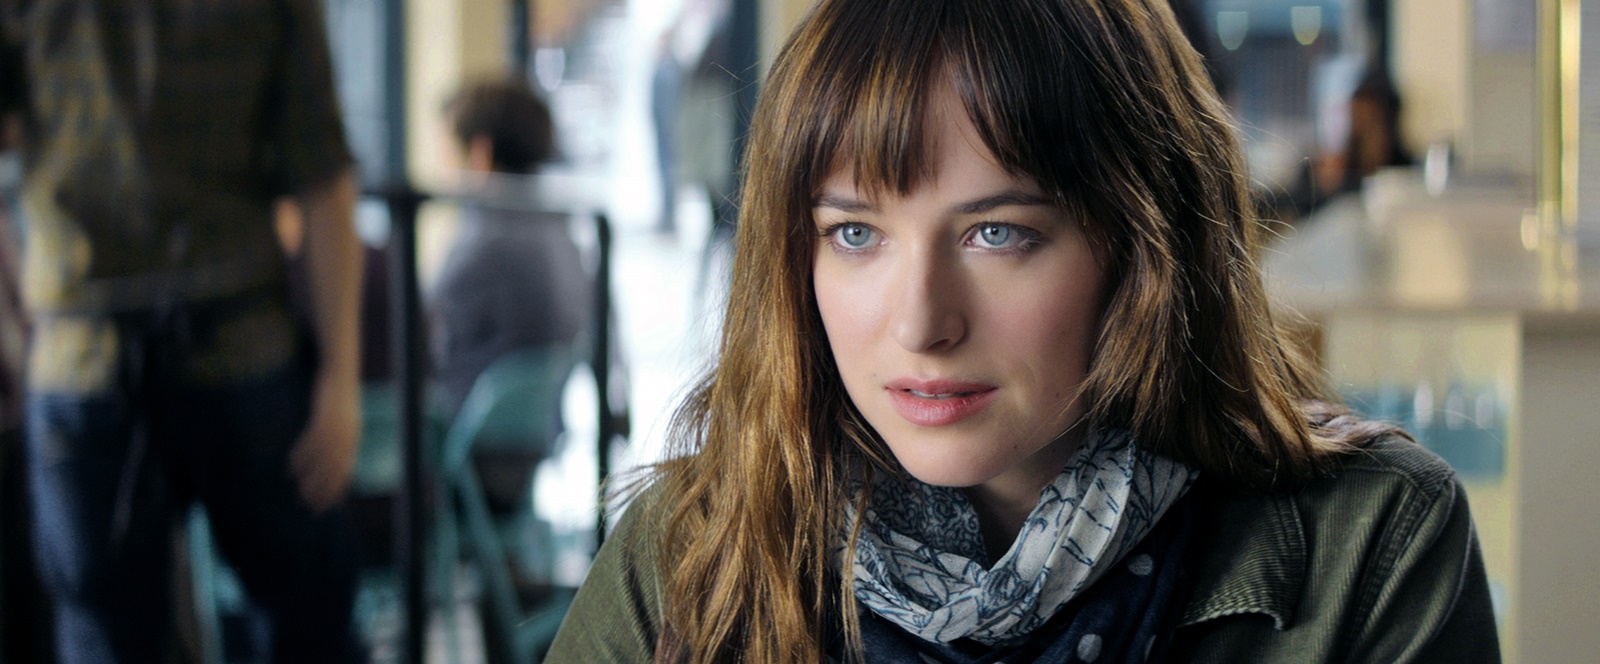 "50 Shades of Grey" - Film 2015 - erster offizieller Trailer